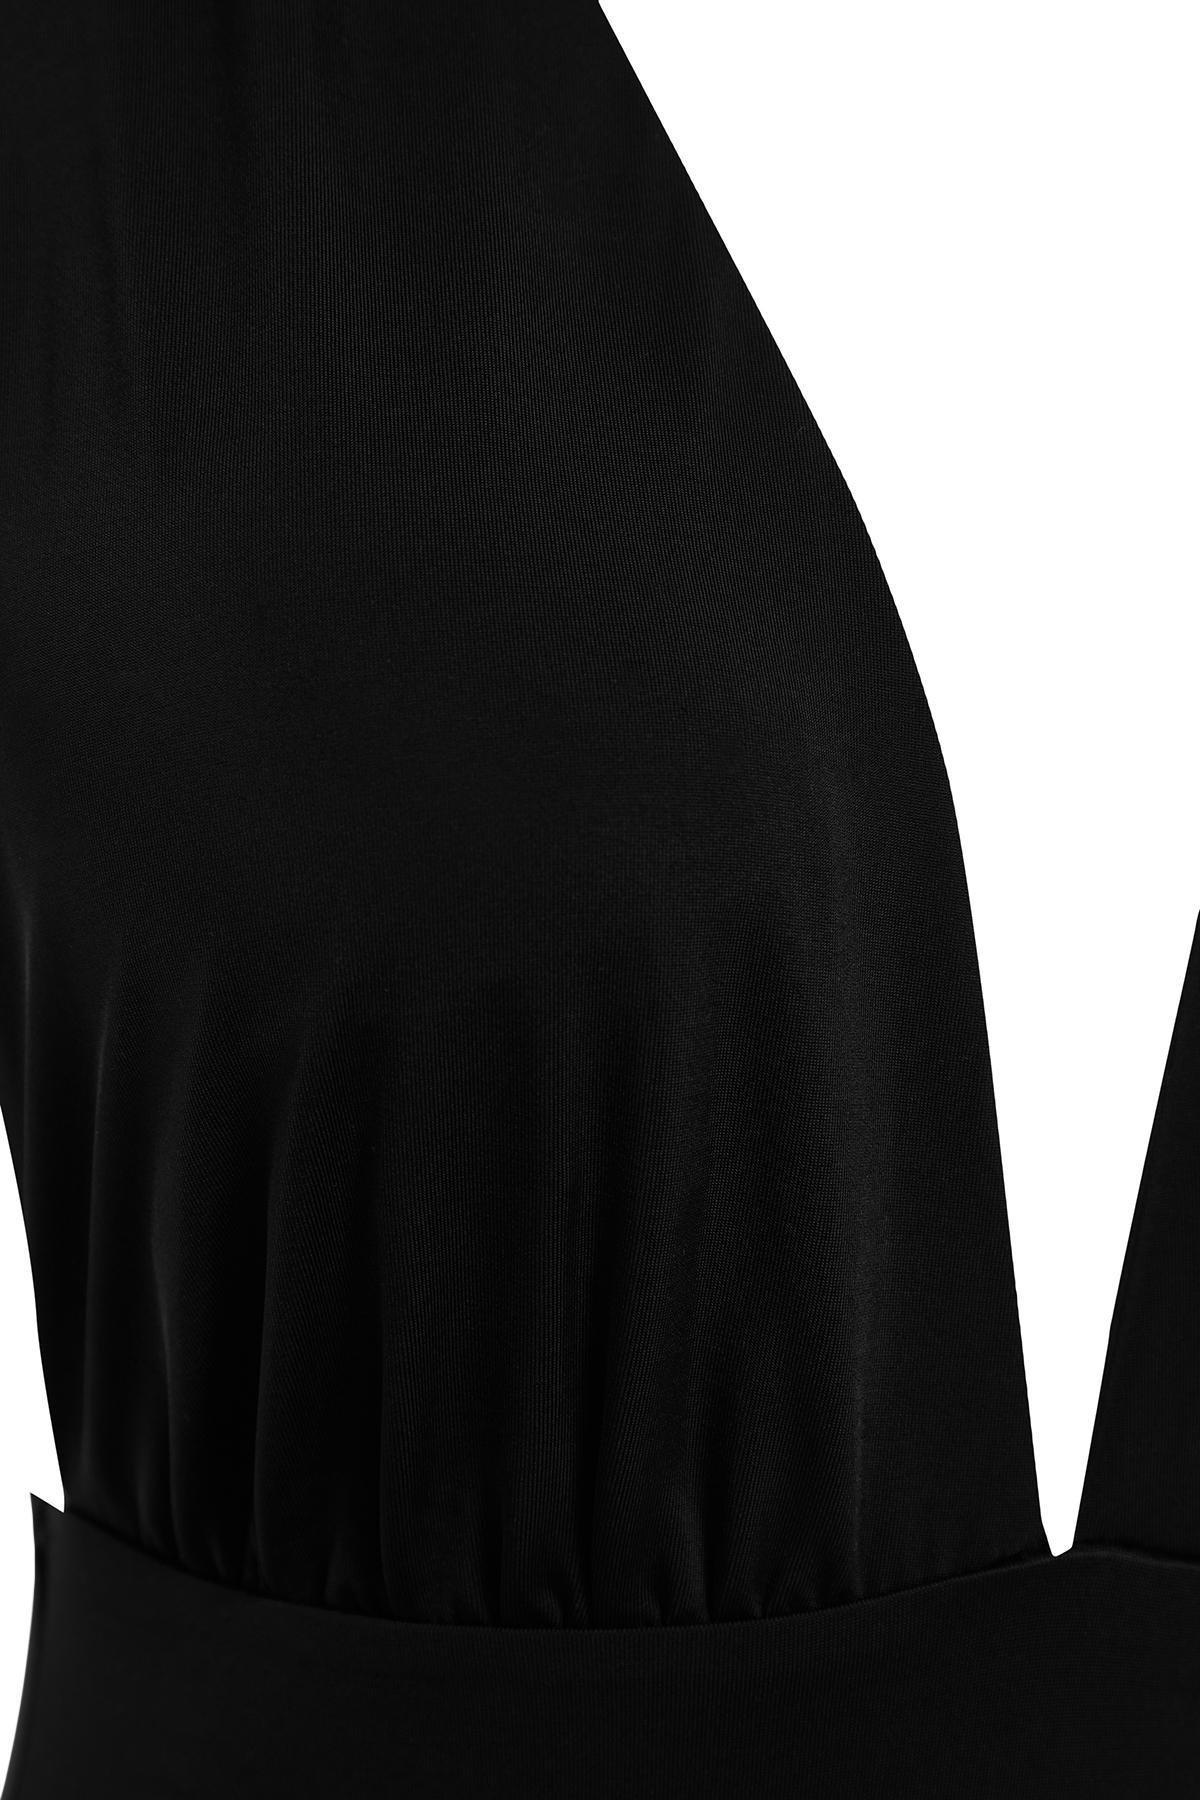 Trendyol - Black Low Cut Plain Swimsuit